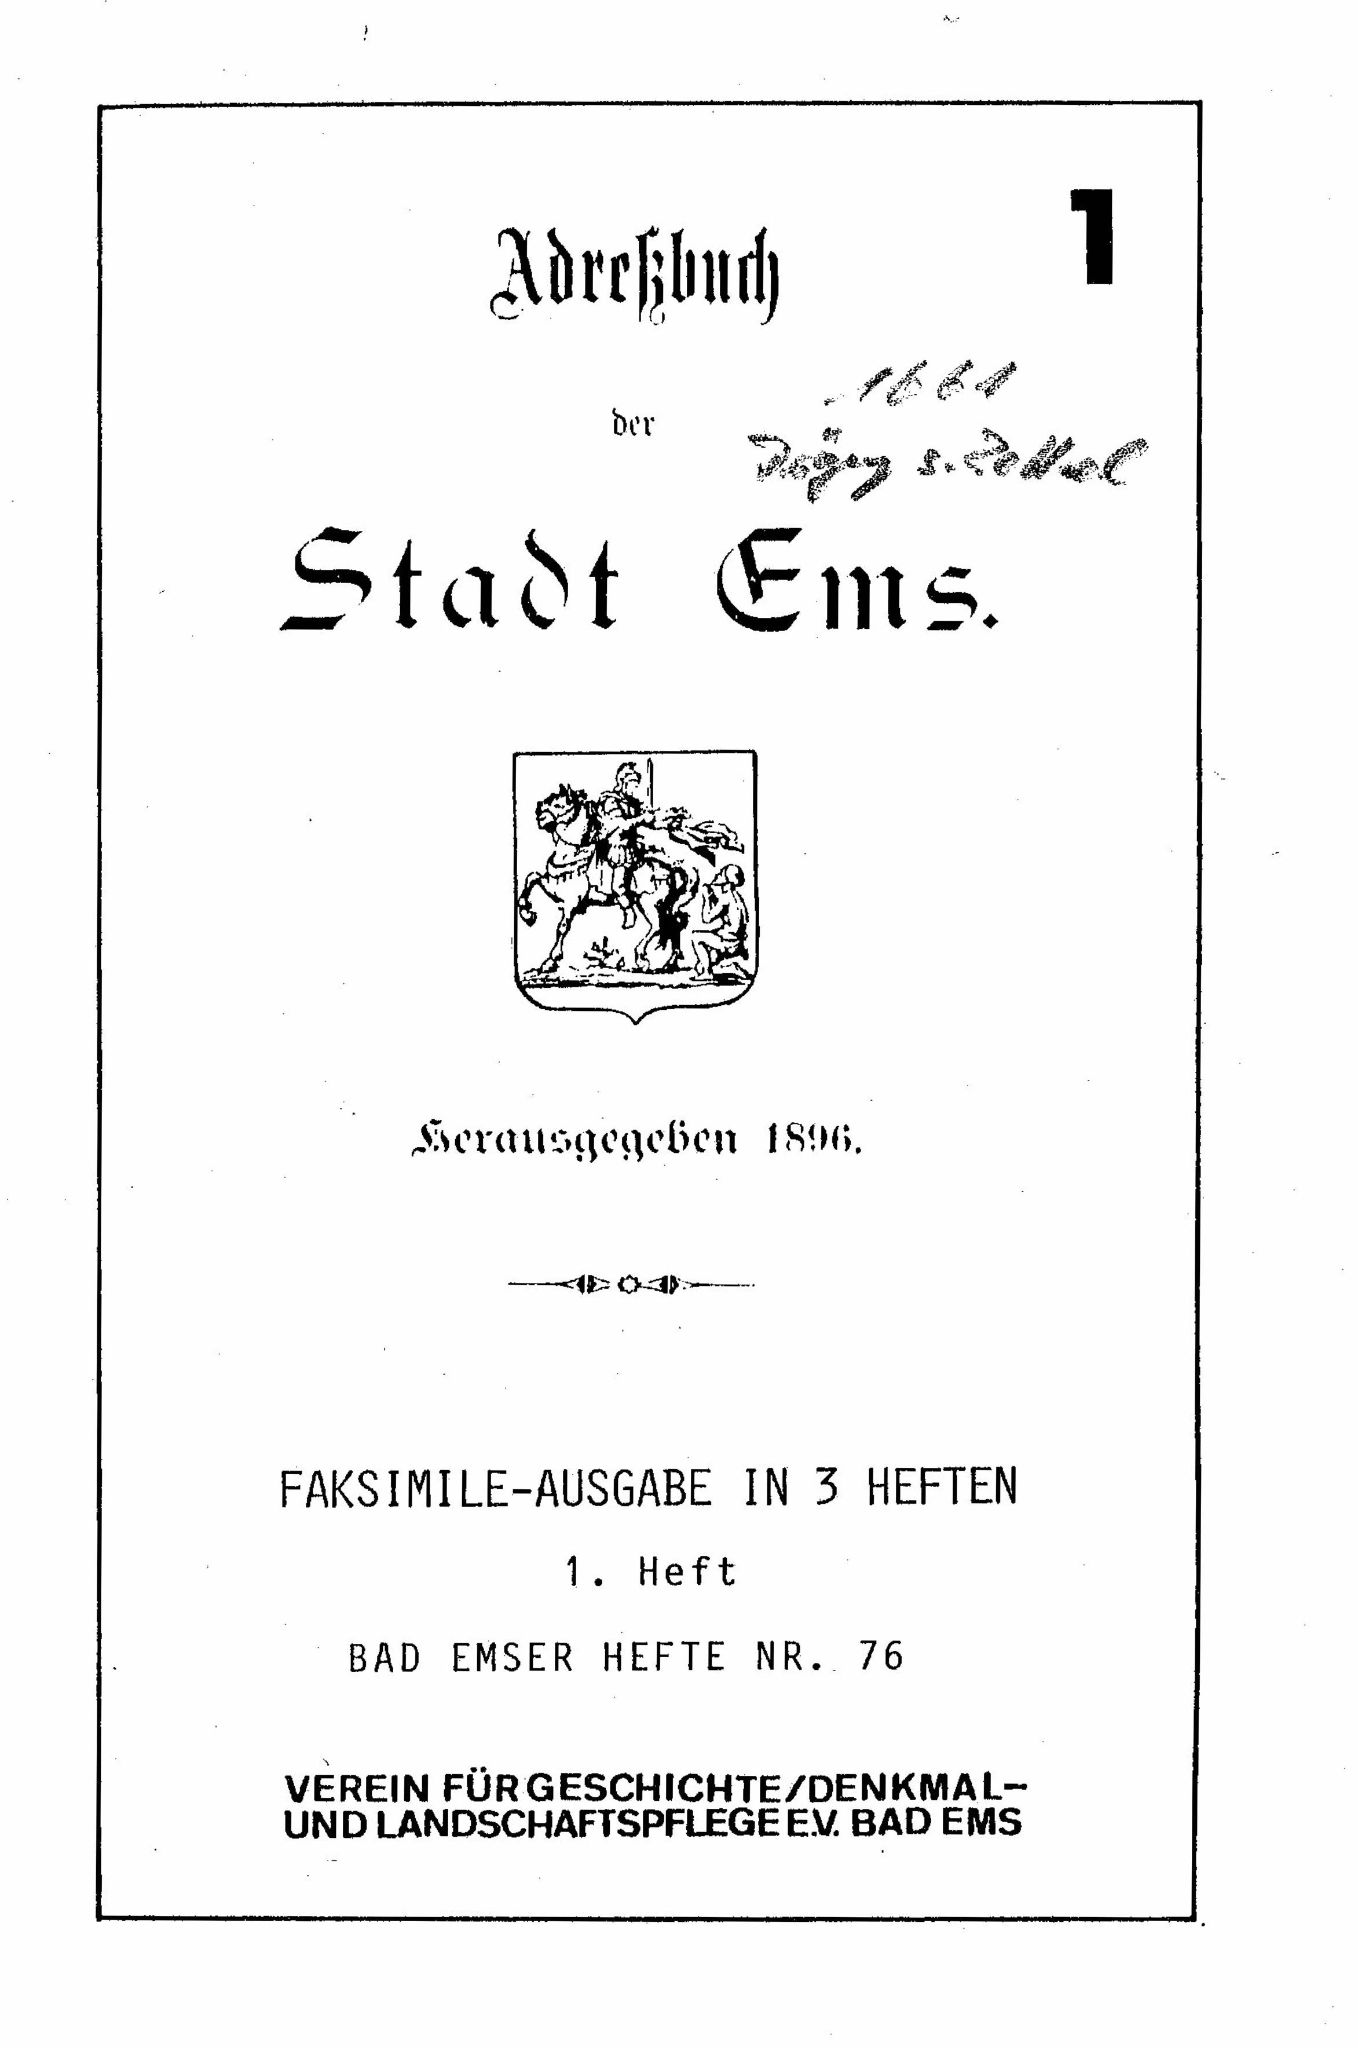 Adreßbuch der Stadt Ems 1896